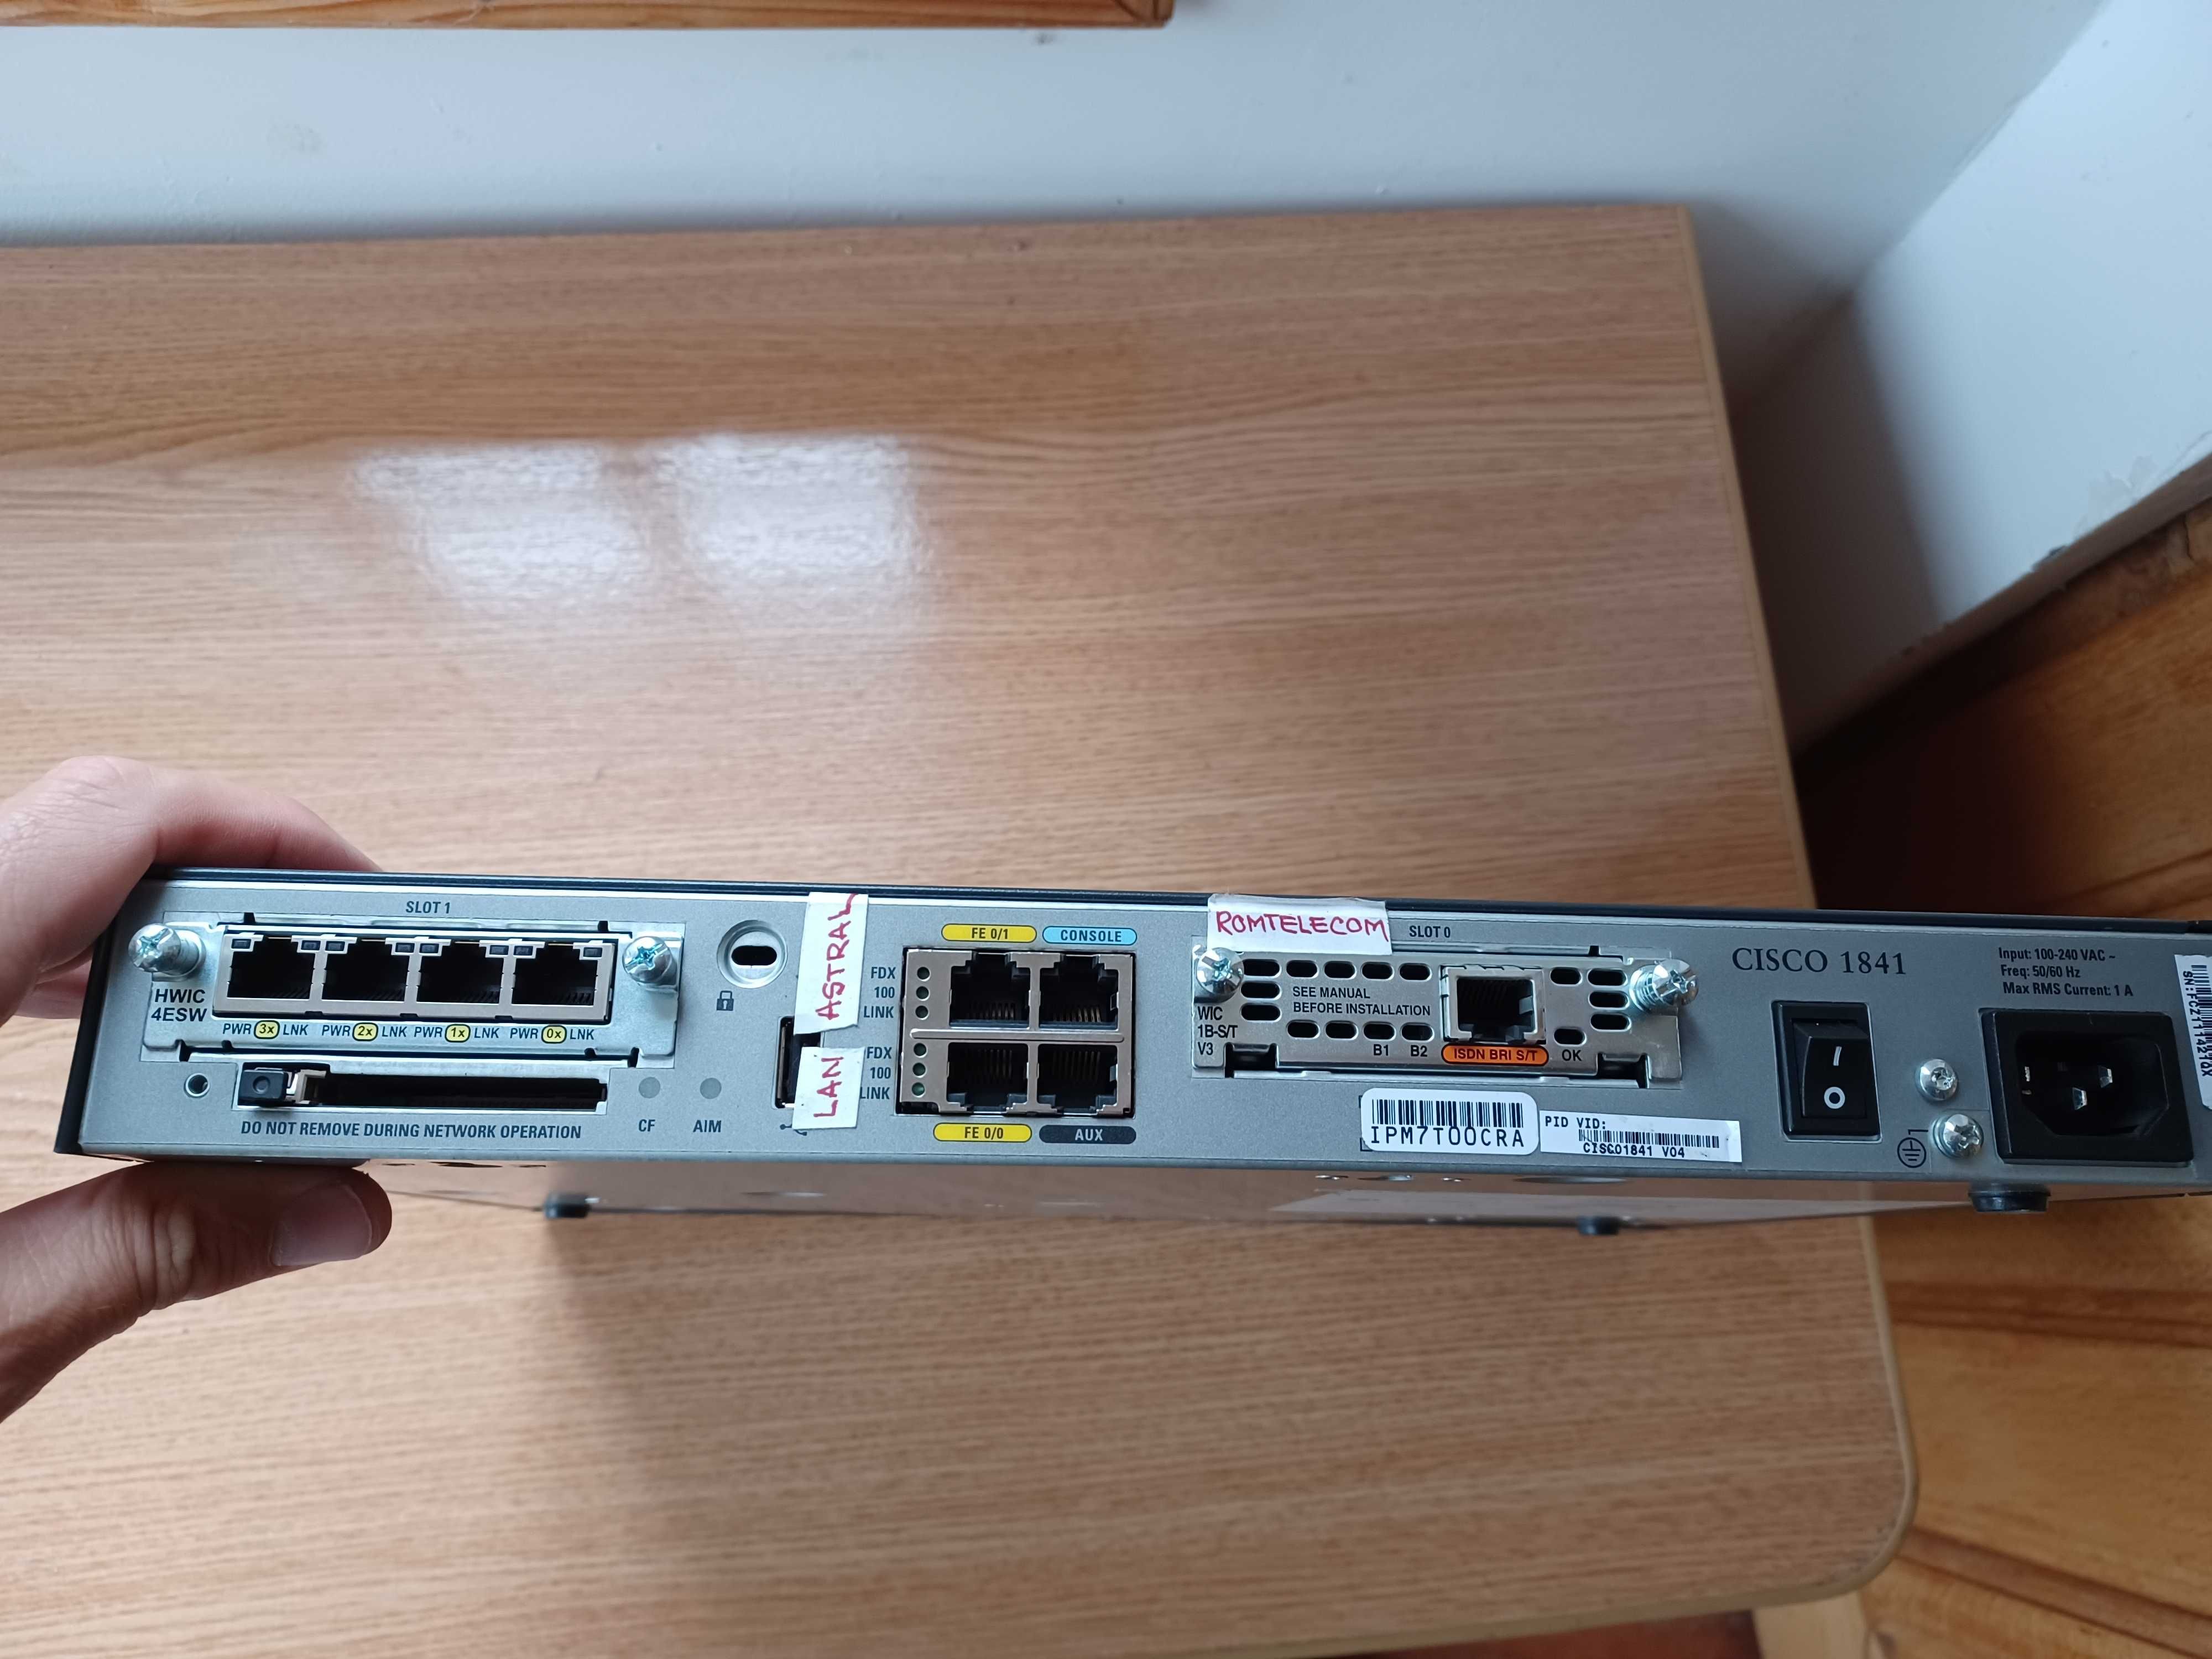 Router Cisco1841 Modular Router w/2xFE, 2 WAN slots